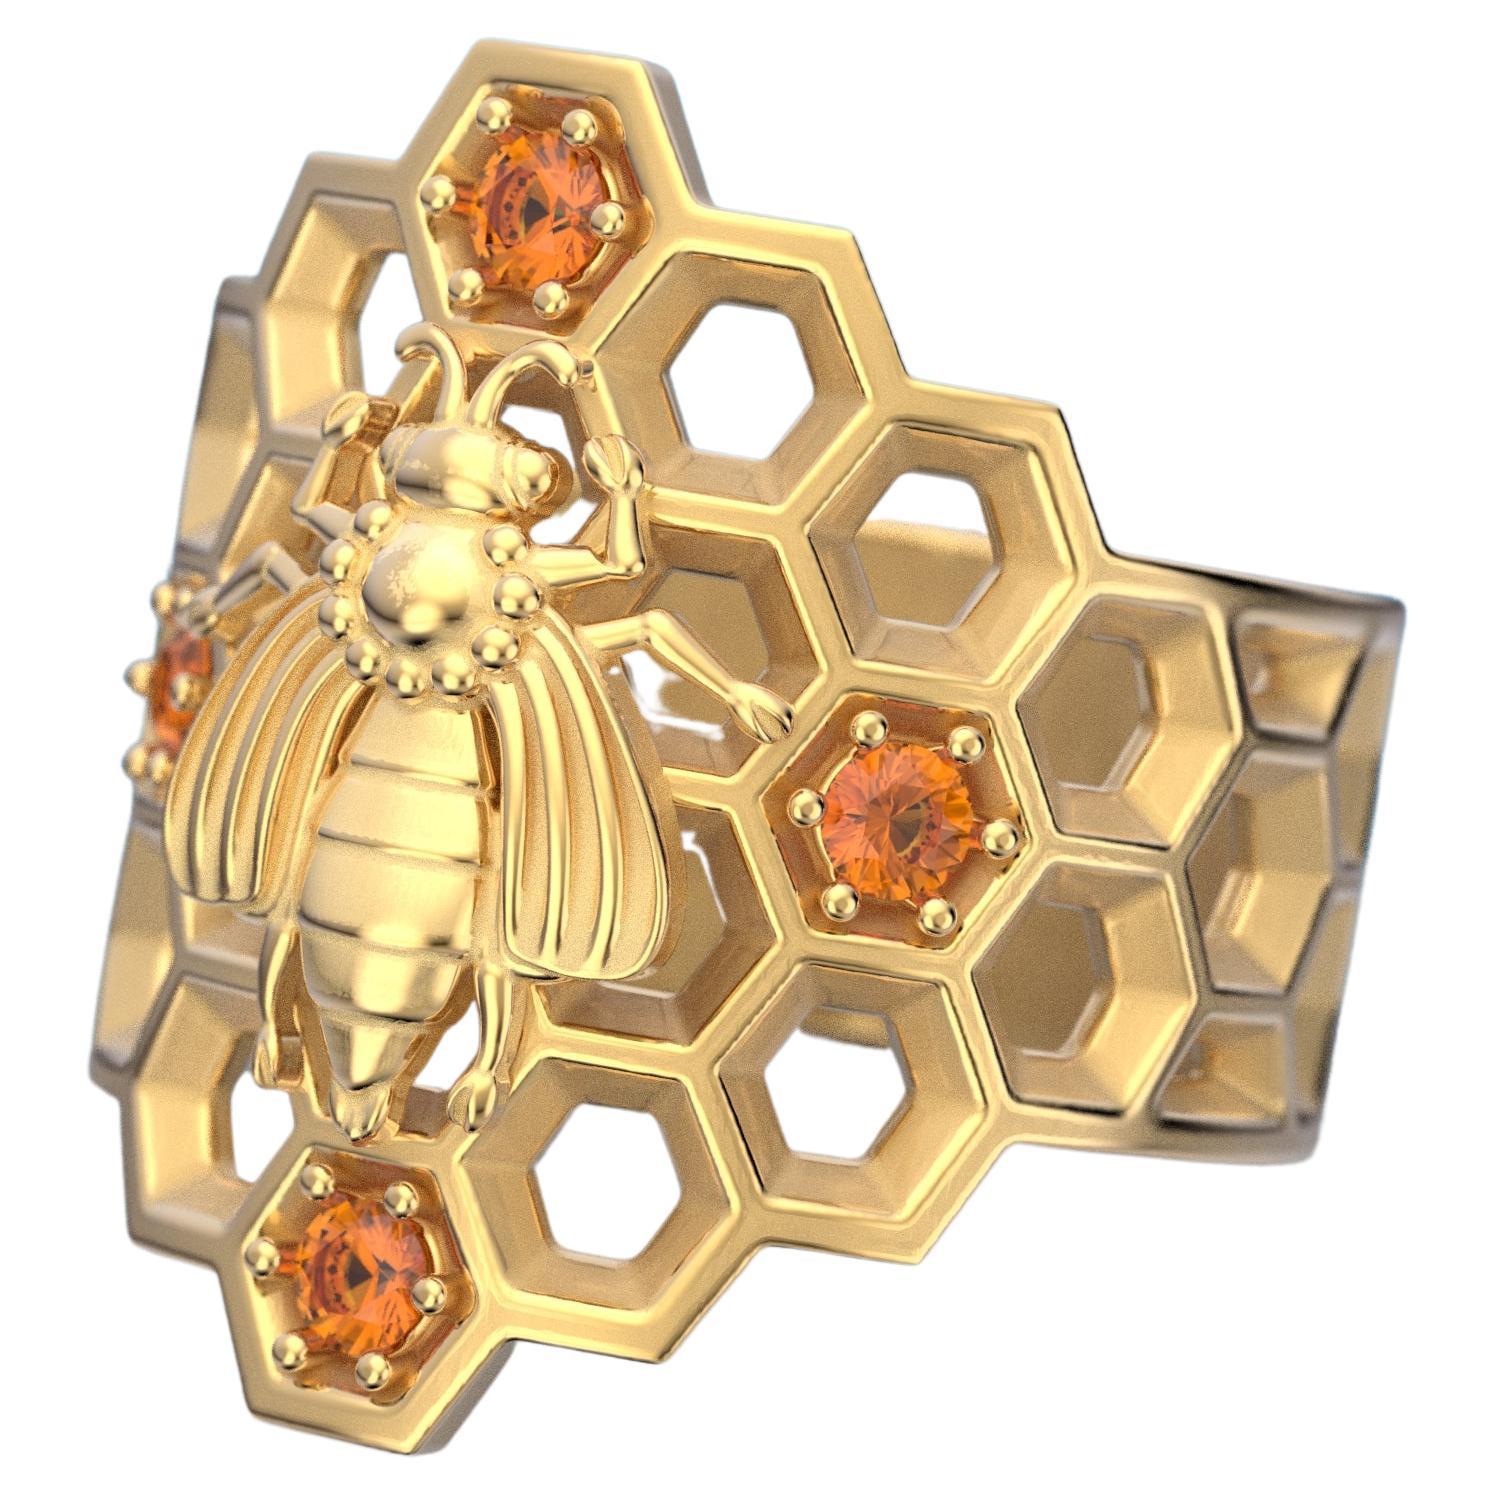 For Sale:   Honeycomb Bee Ring in 14k Solid Gold with natural Orange Spessartite Garnet 2